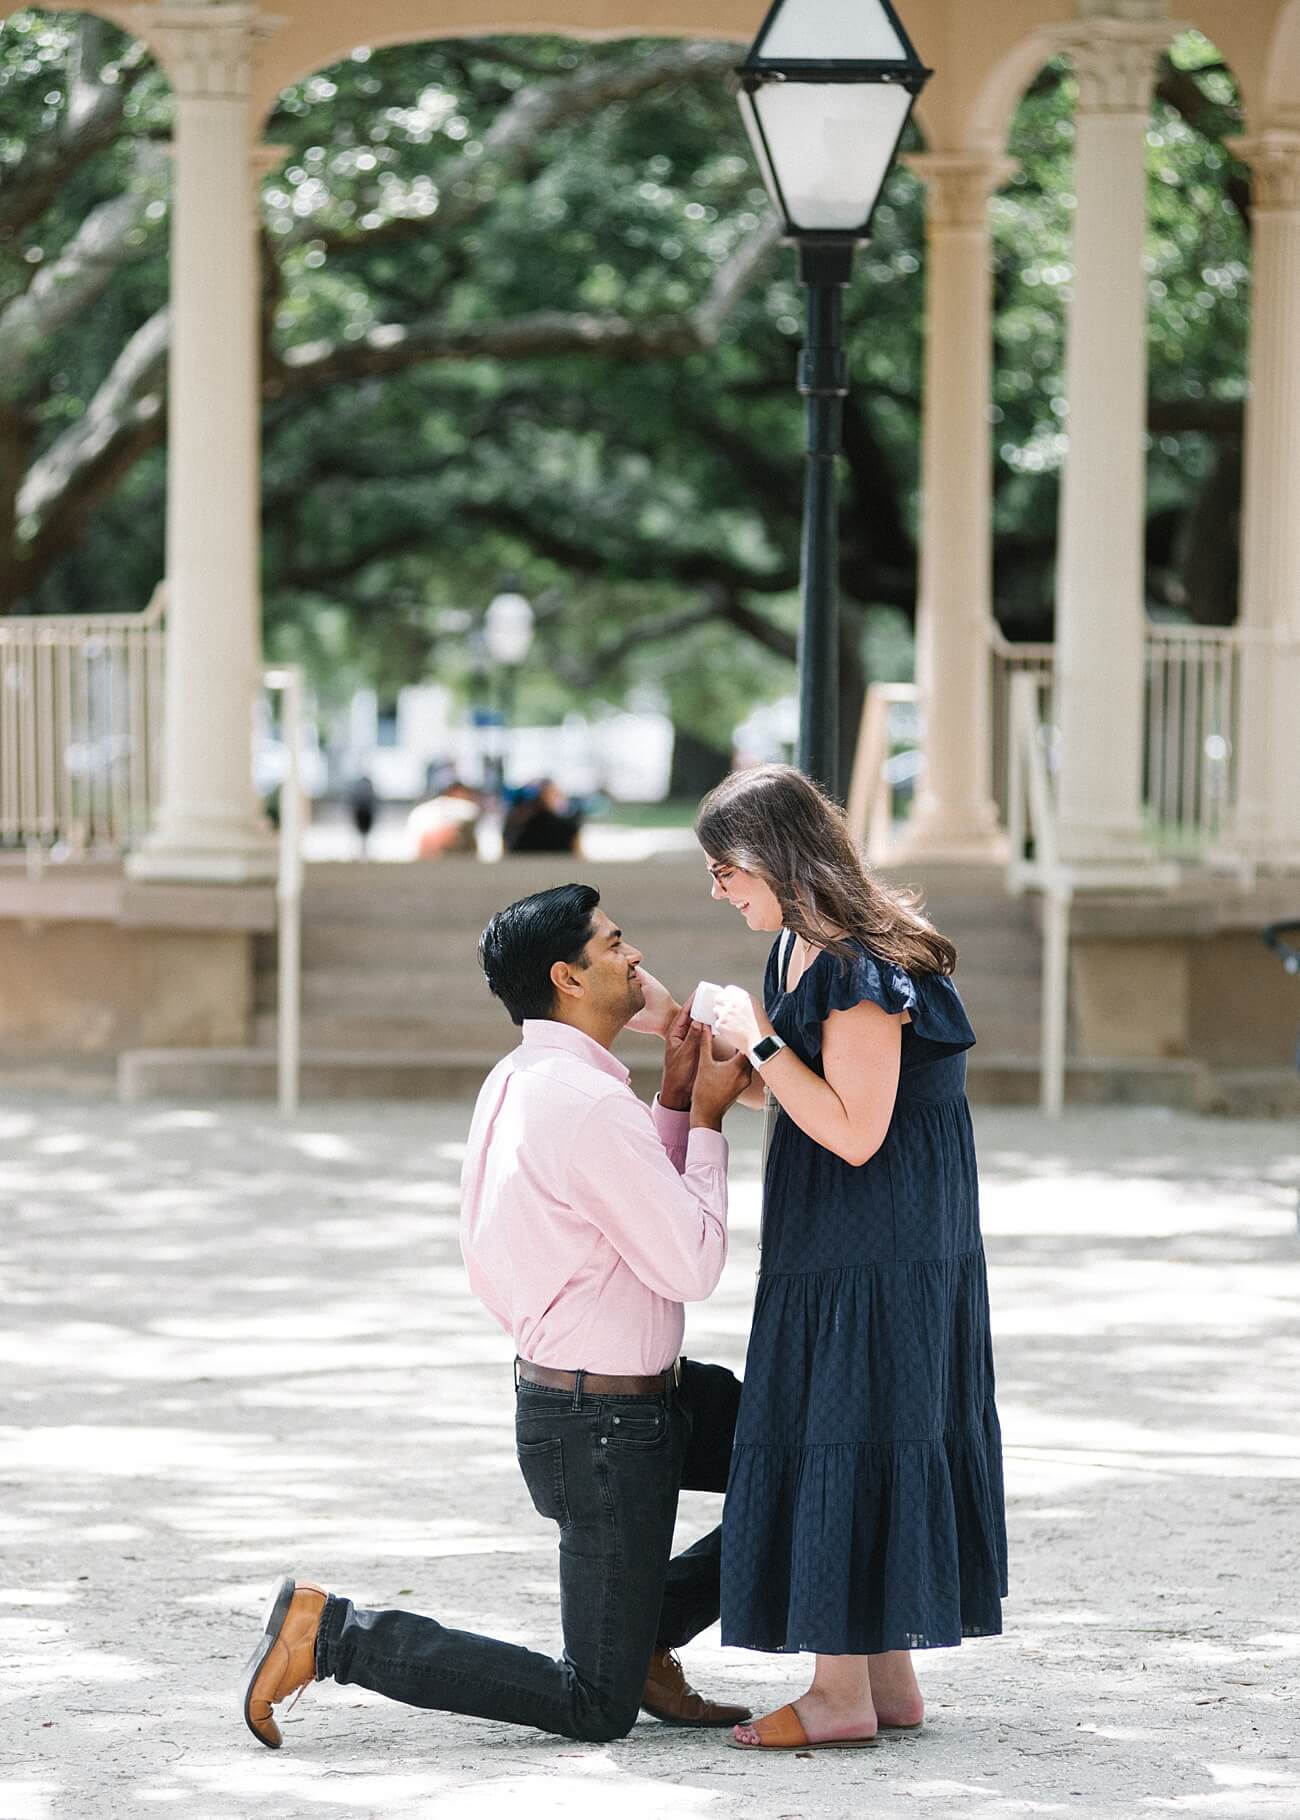 Young man proposing to his girlfriend in South Carolina